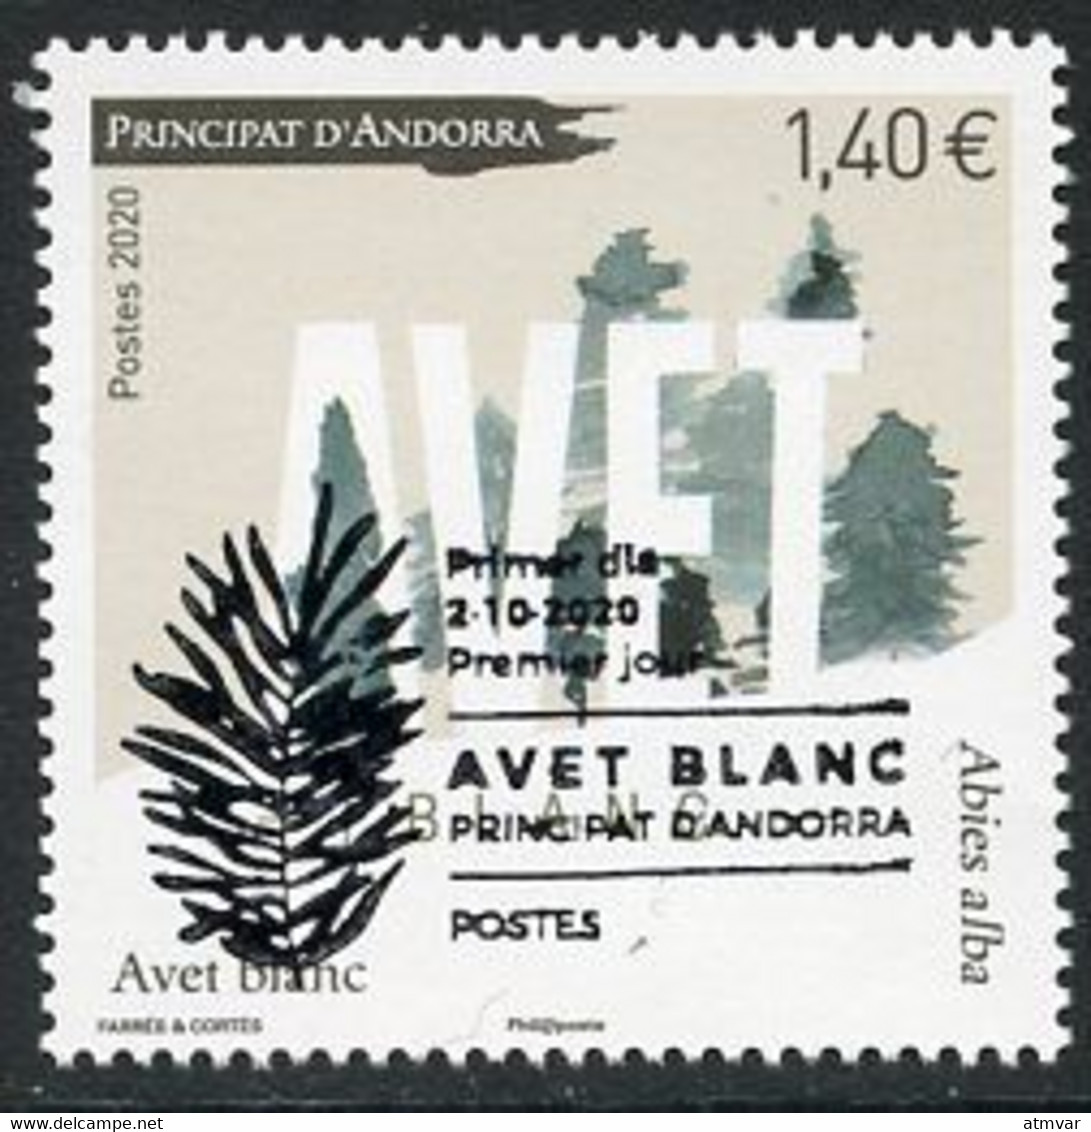 ANDORRA ANDORRE (2020) - Avet Blanc, Abies Alba, Sapin Blanc - Premier Jour, First Day Postmark, Matasello Primer Día - Oblitérés